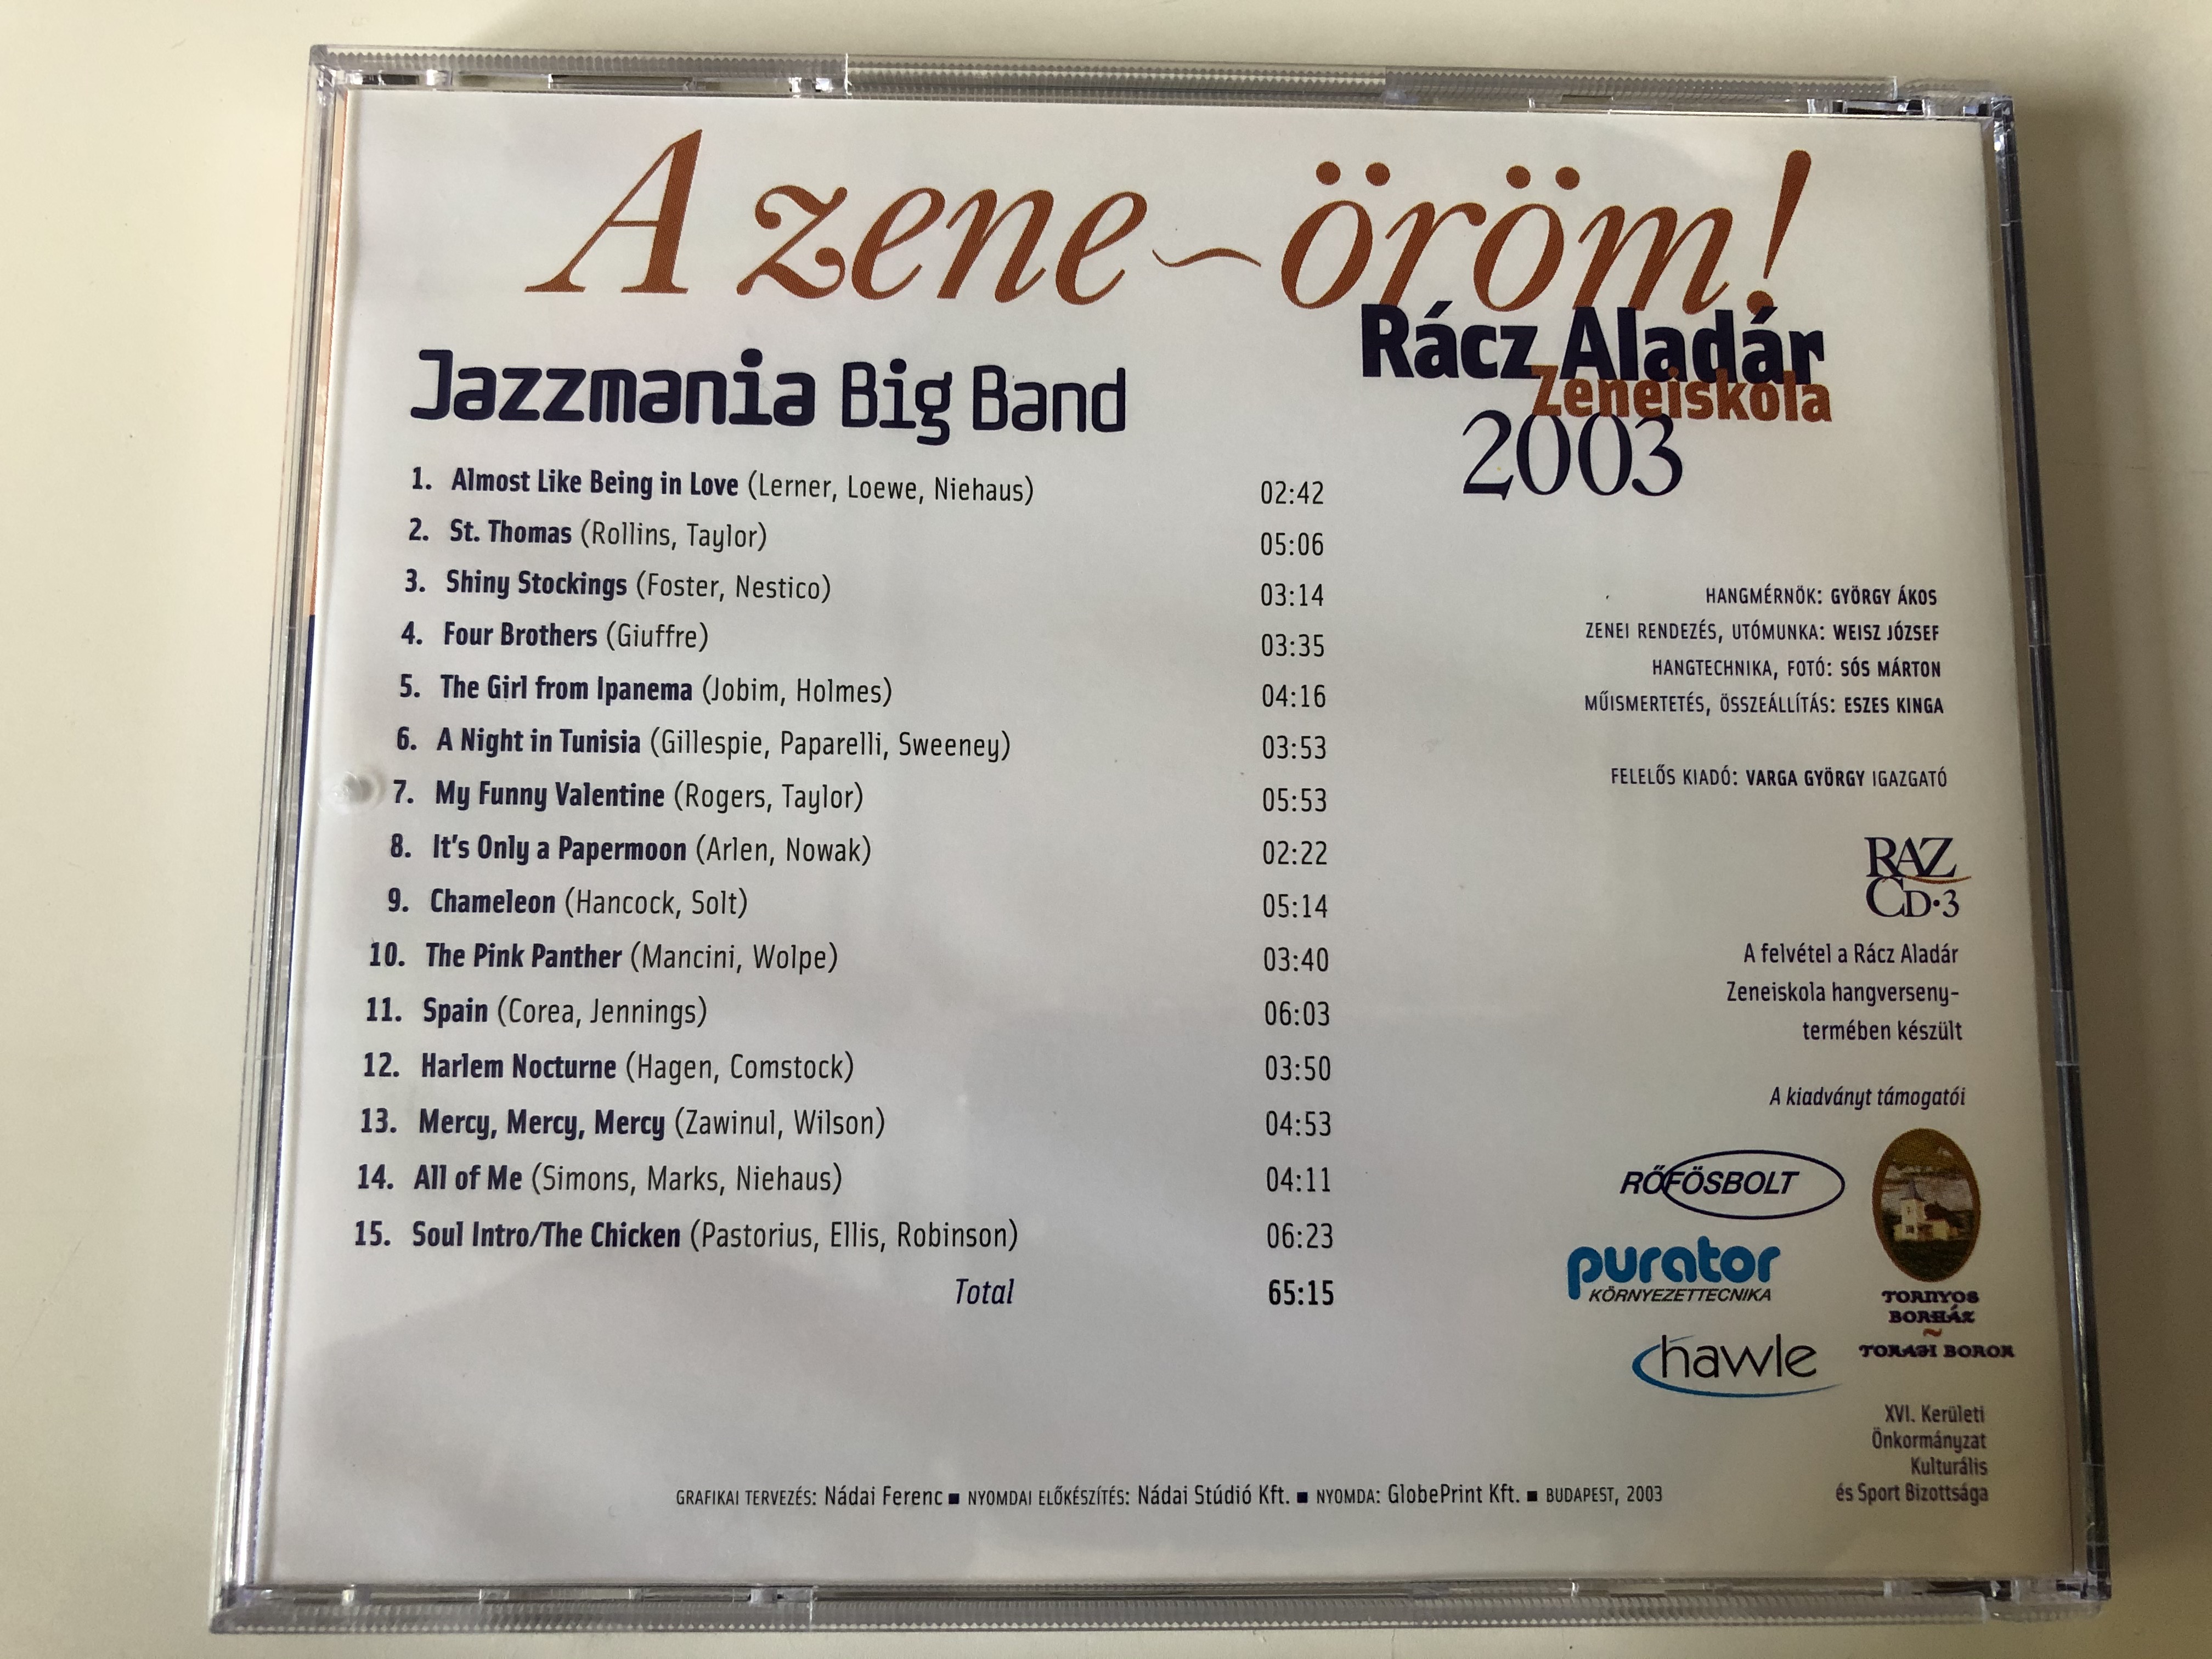 a-zene-orom-3.-rasz-aladar-zeneiskola-2003-jazzmania-big-band-mc-cd-produkcio-audio-cd-2003-hcd-187-cd3-7-.jpg